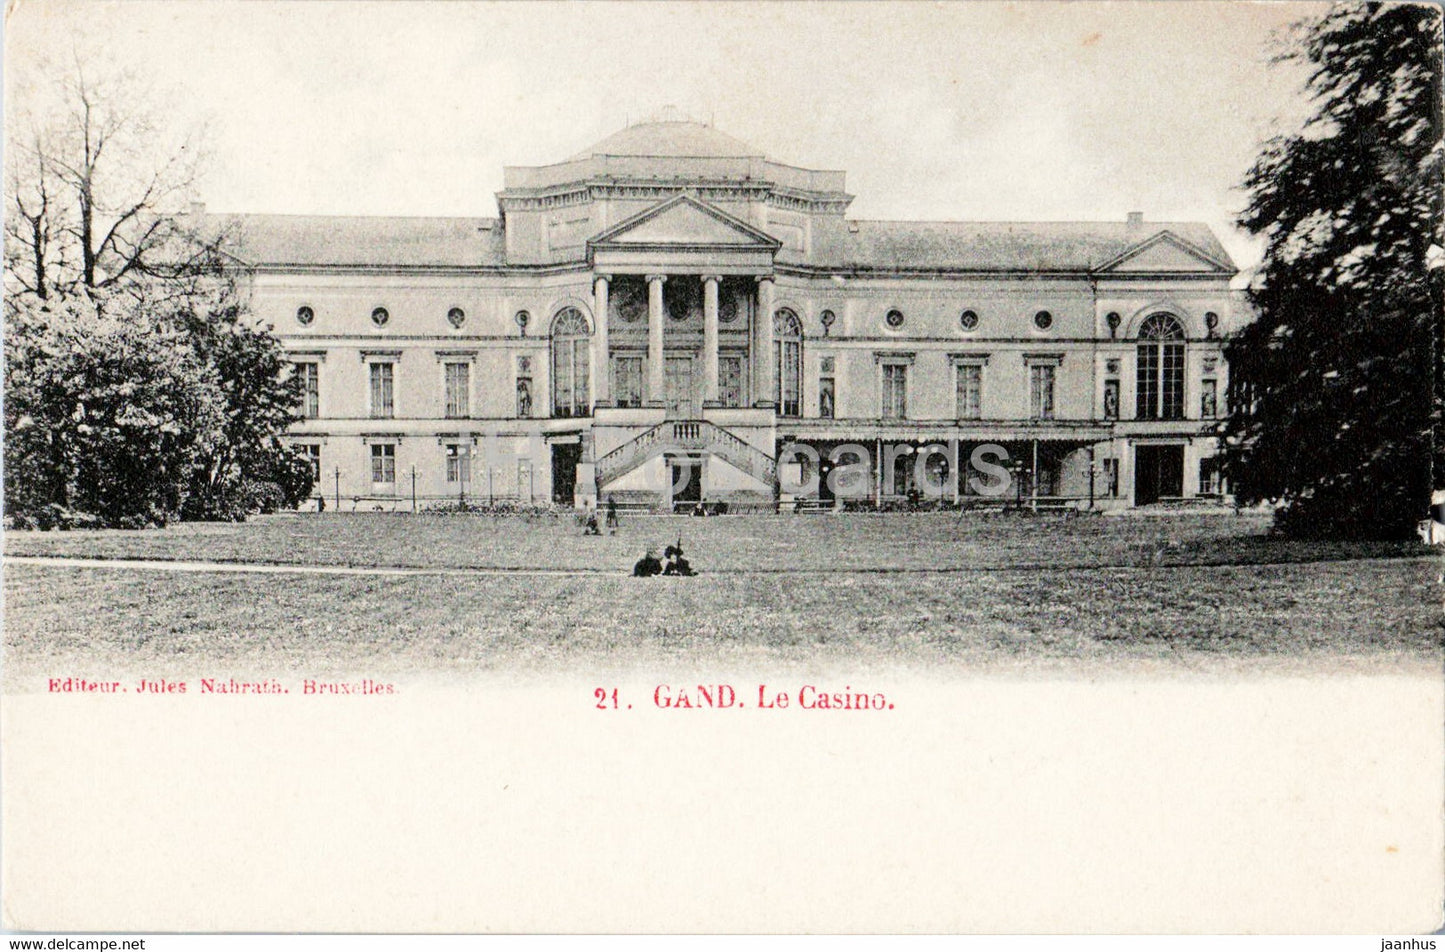 Gand - Gent - Le Casino - 21 - old postcard - Belgium - unused - JH Postcards